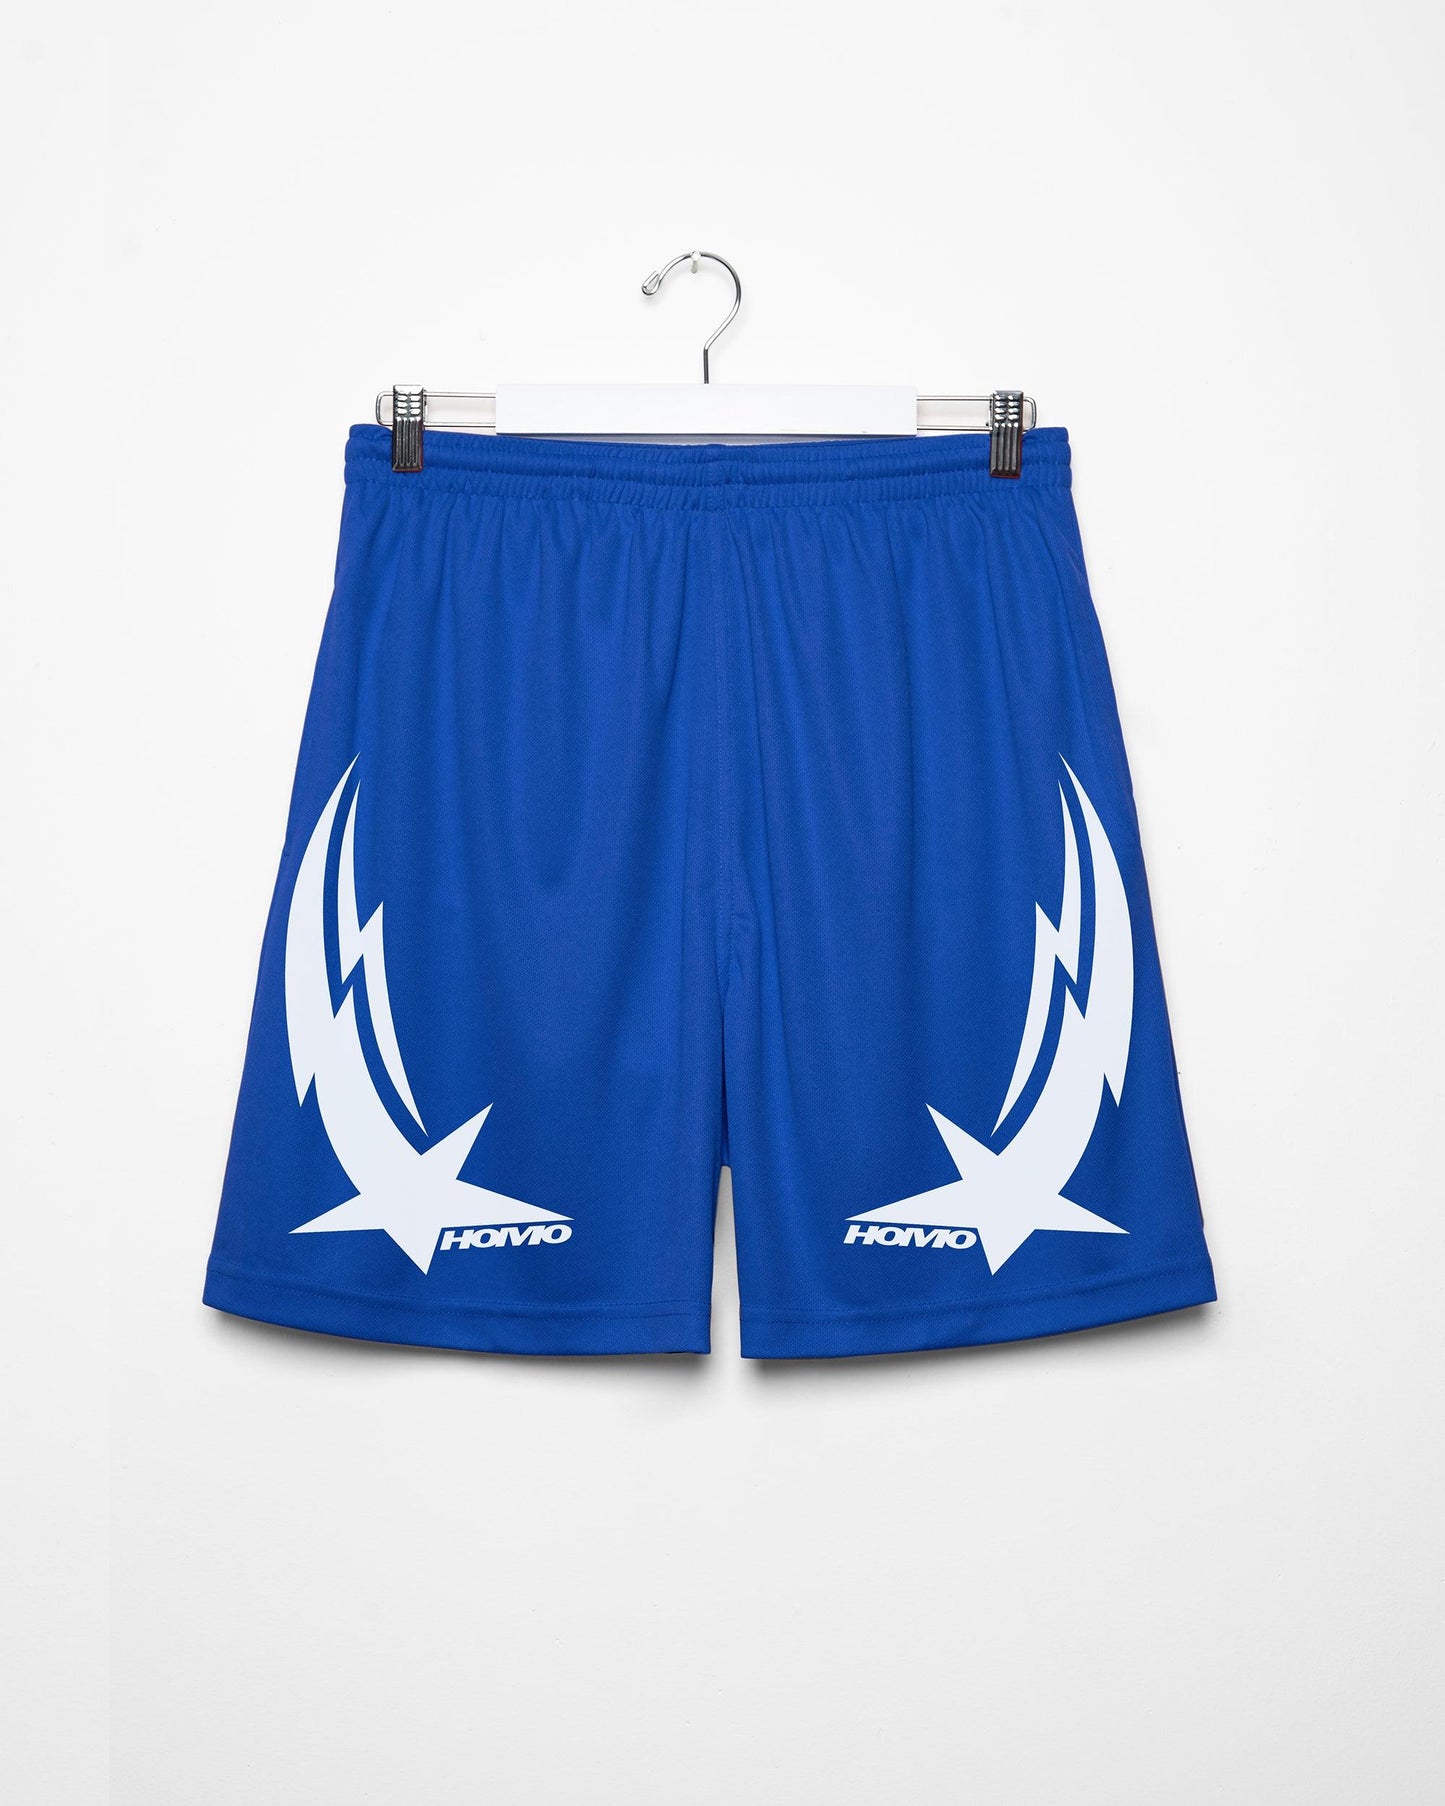 Turbo basketball shorts, white on blue - HOMOLONDON